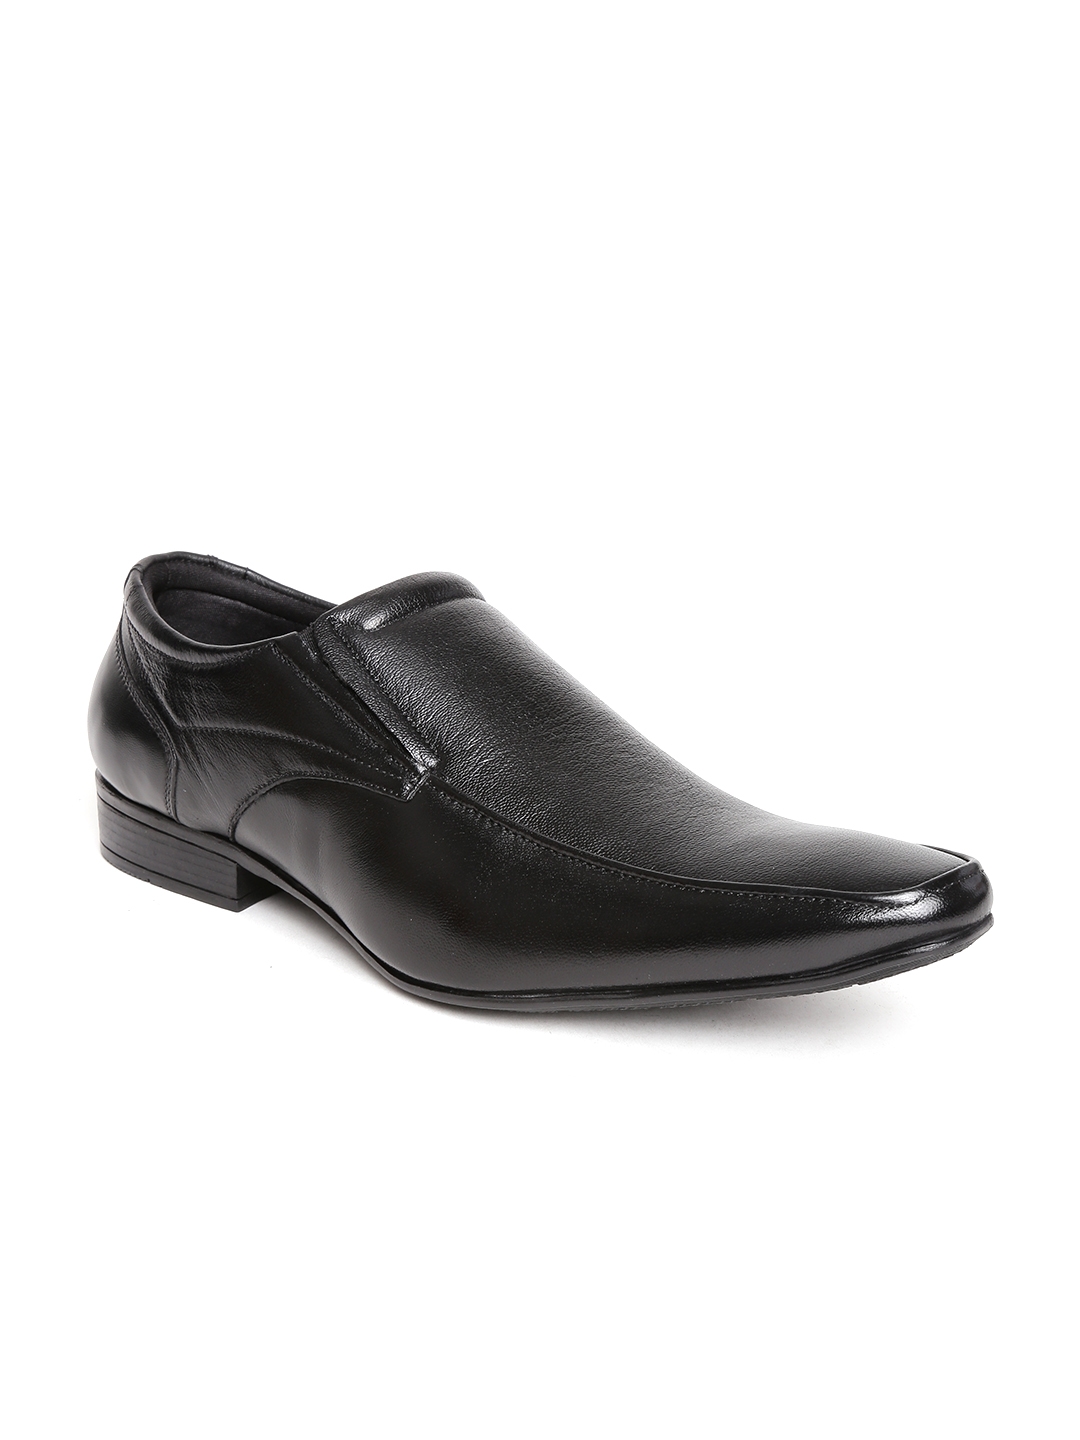 bata black leather formal shoes